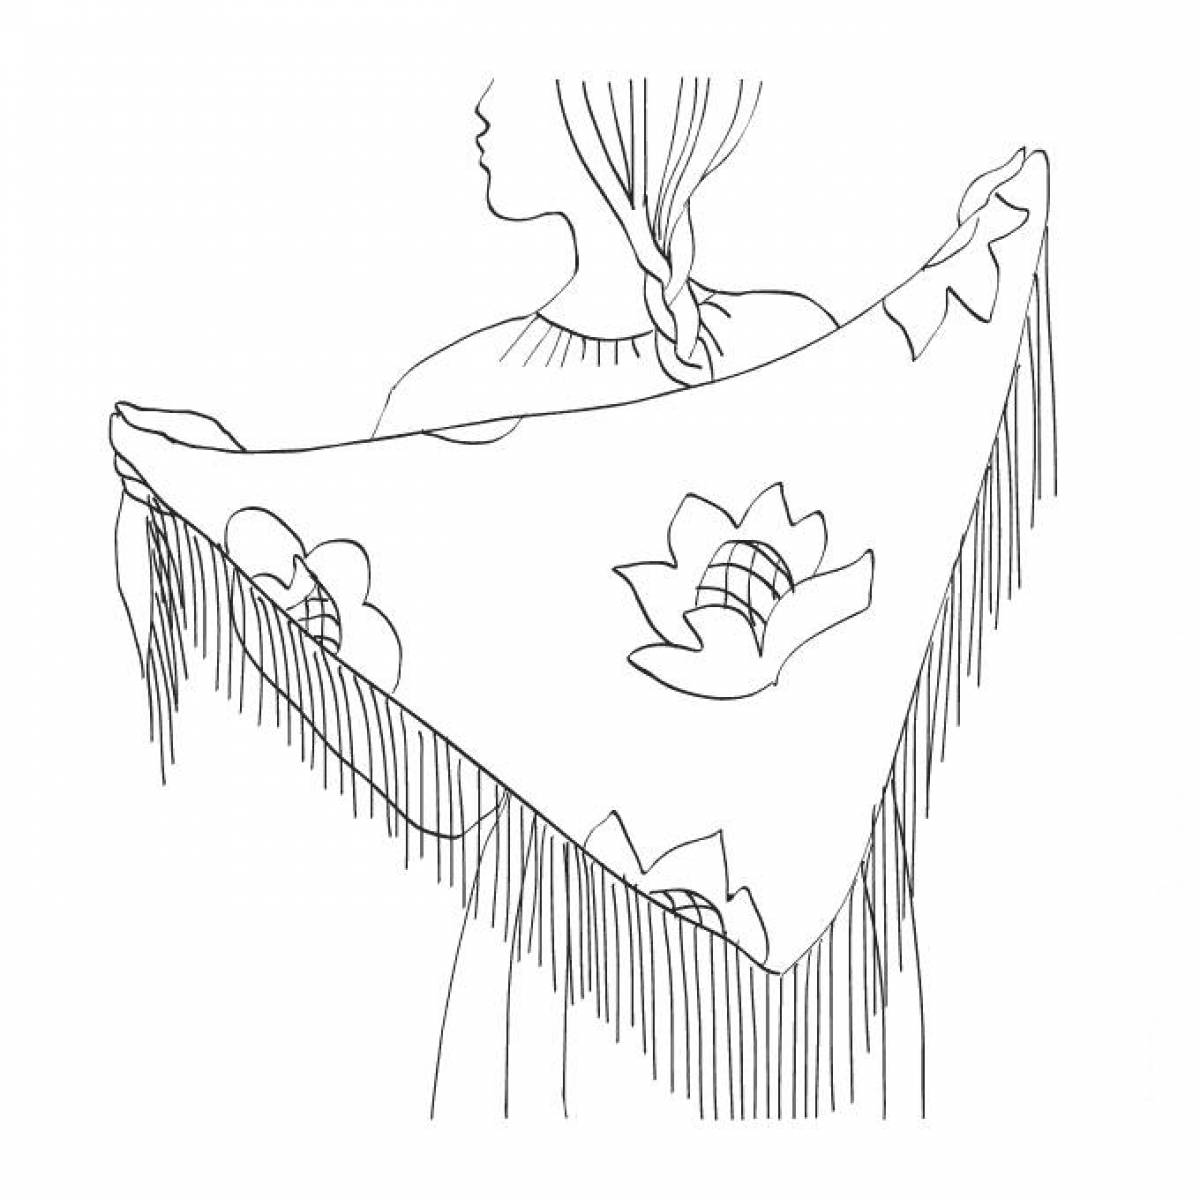 Handkerchief drawing